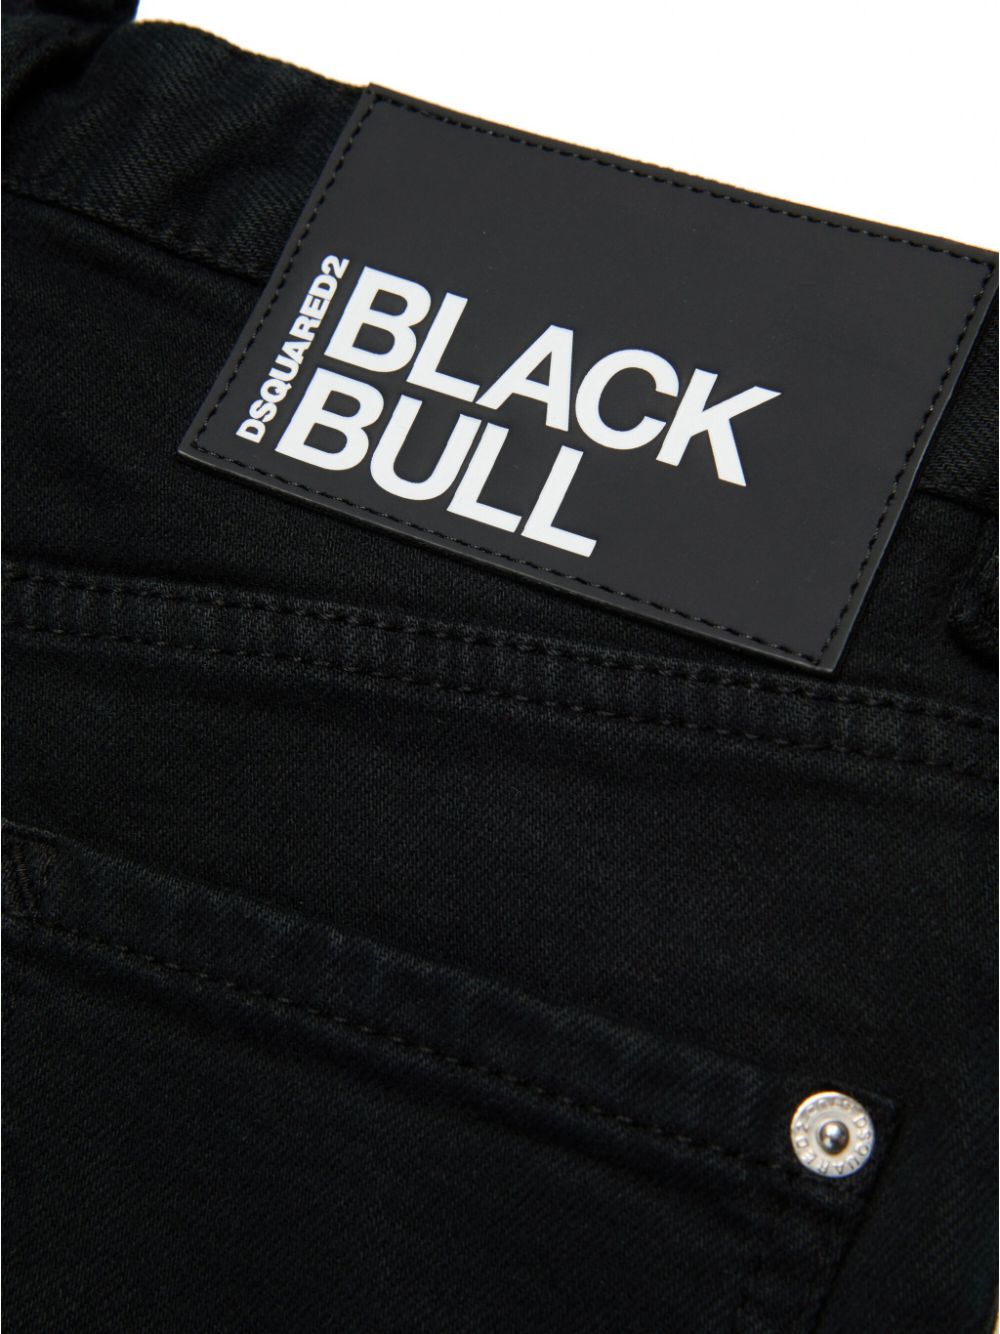 Black cotton jeans for children